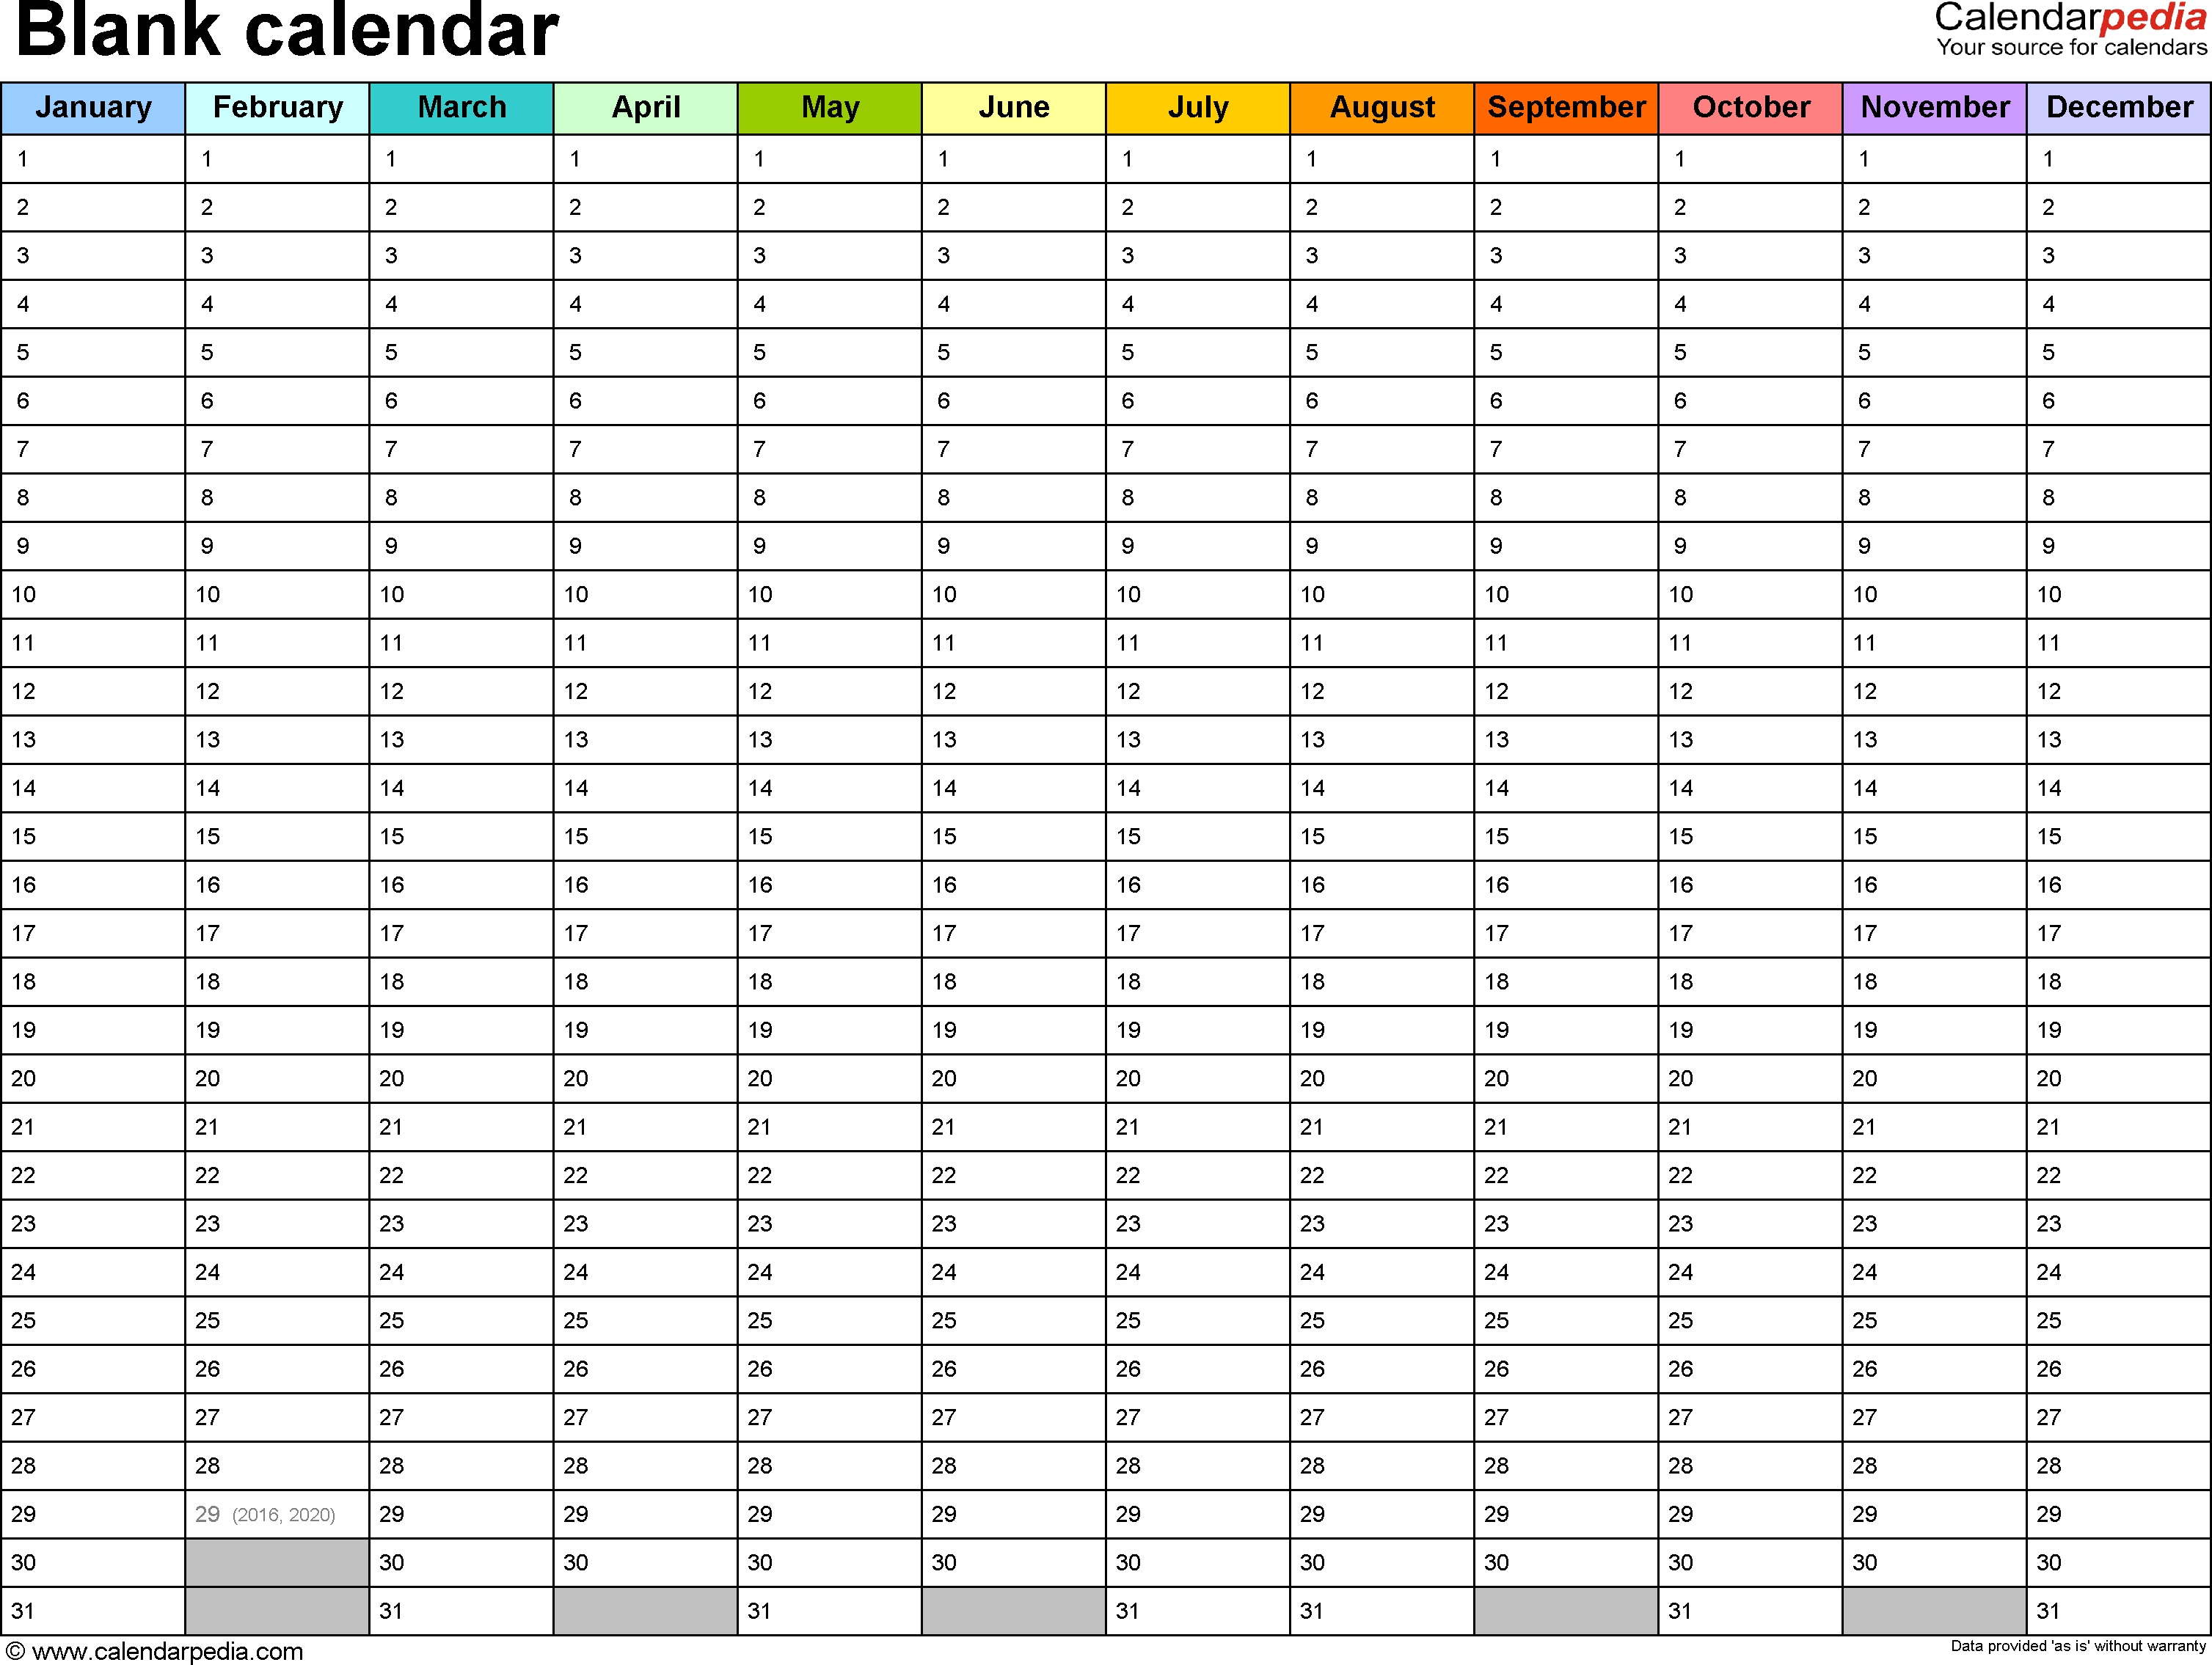 Blank Calendar - 9 Free Printable Microsoft Word Templates inside Template For Year At A Glance Calendar